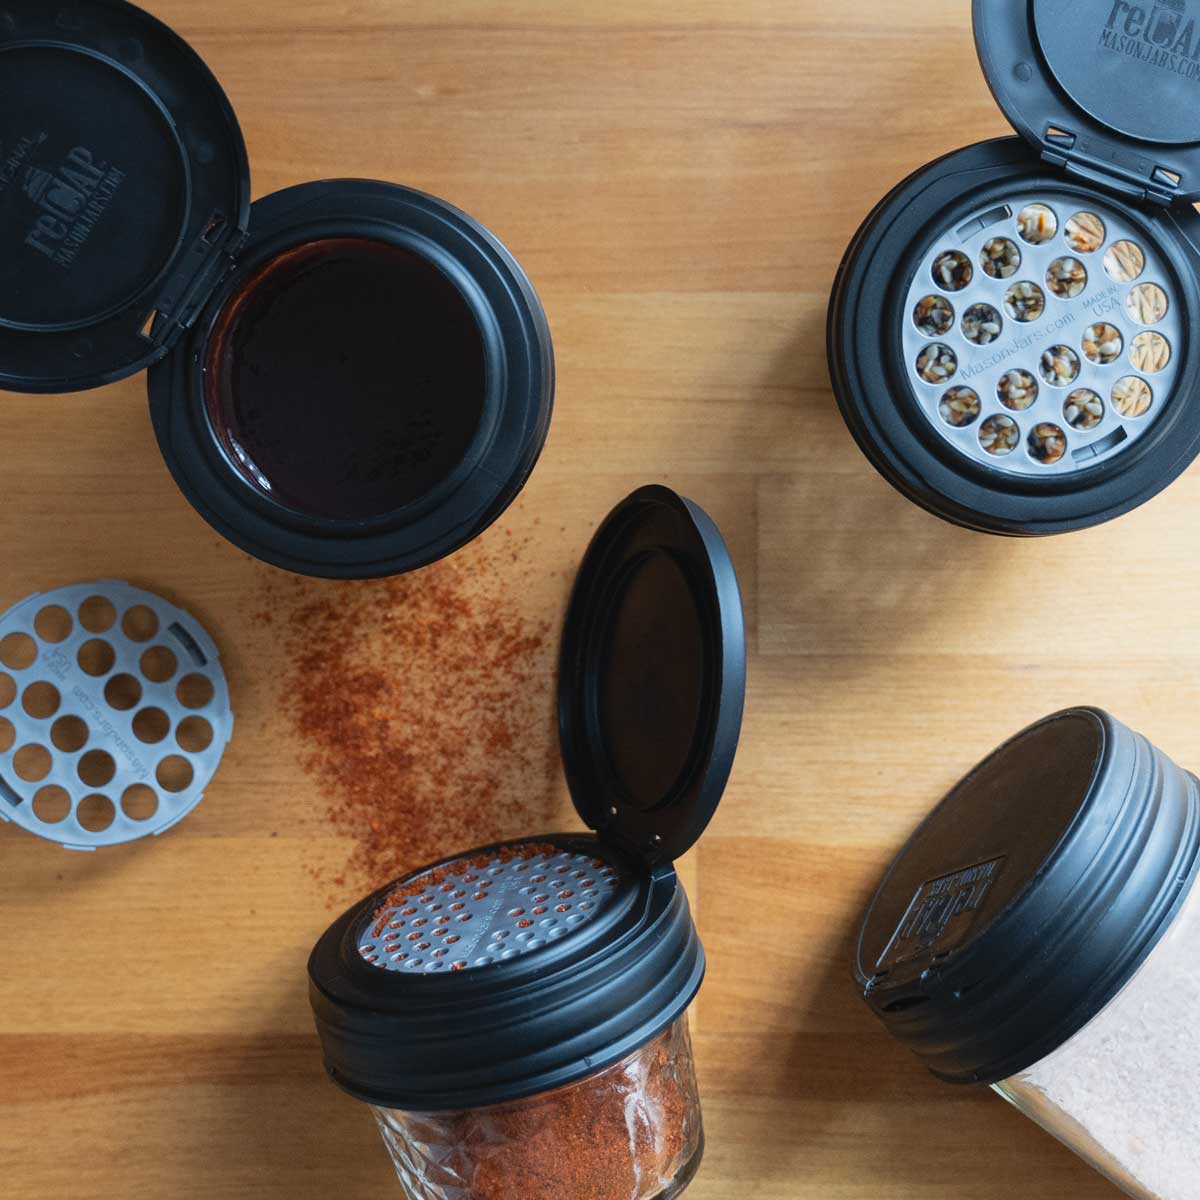 Stainless Steel Spice Shaker Lids for Regular Mouth Mason Jars